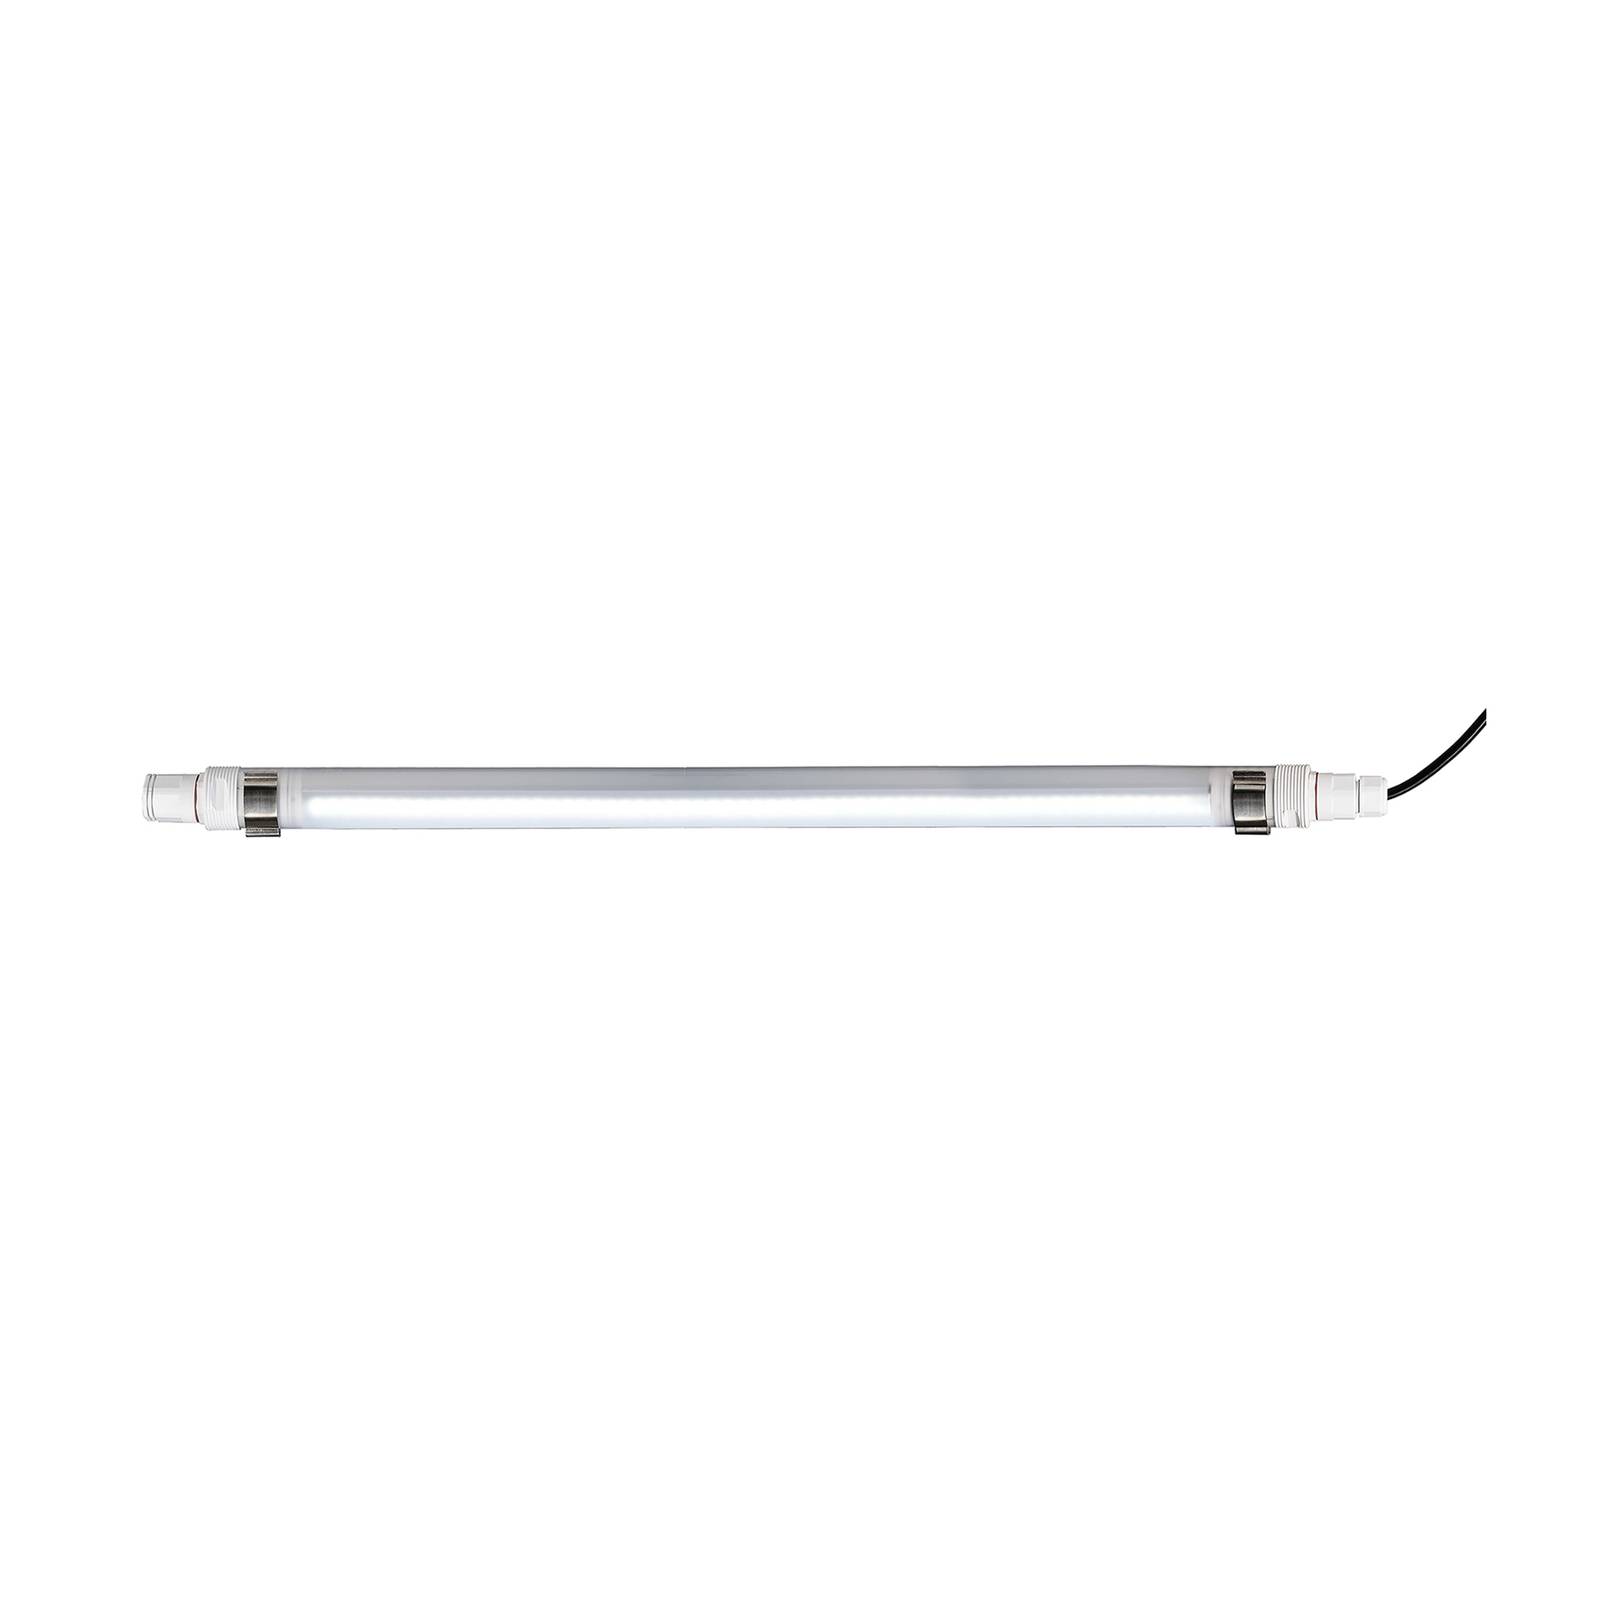 Deko-Light LED-Feuchtraumlampe Tri Proof Slim, Länge 70 cm